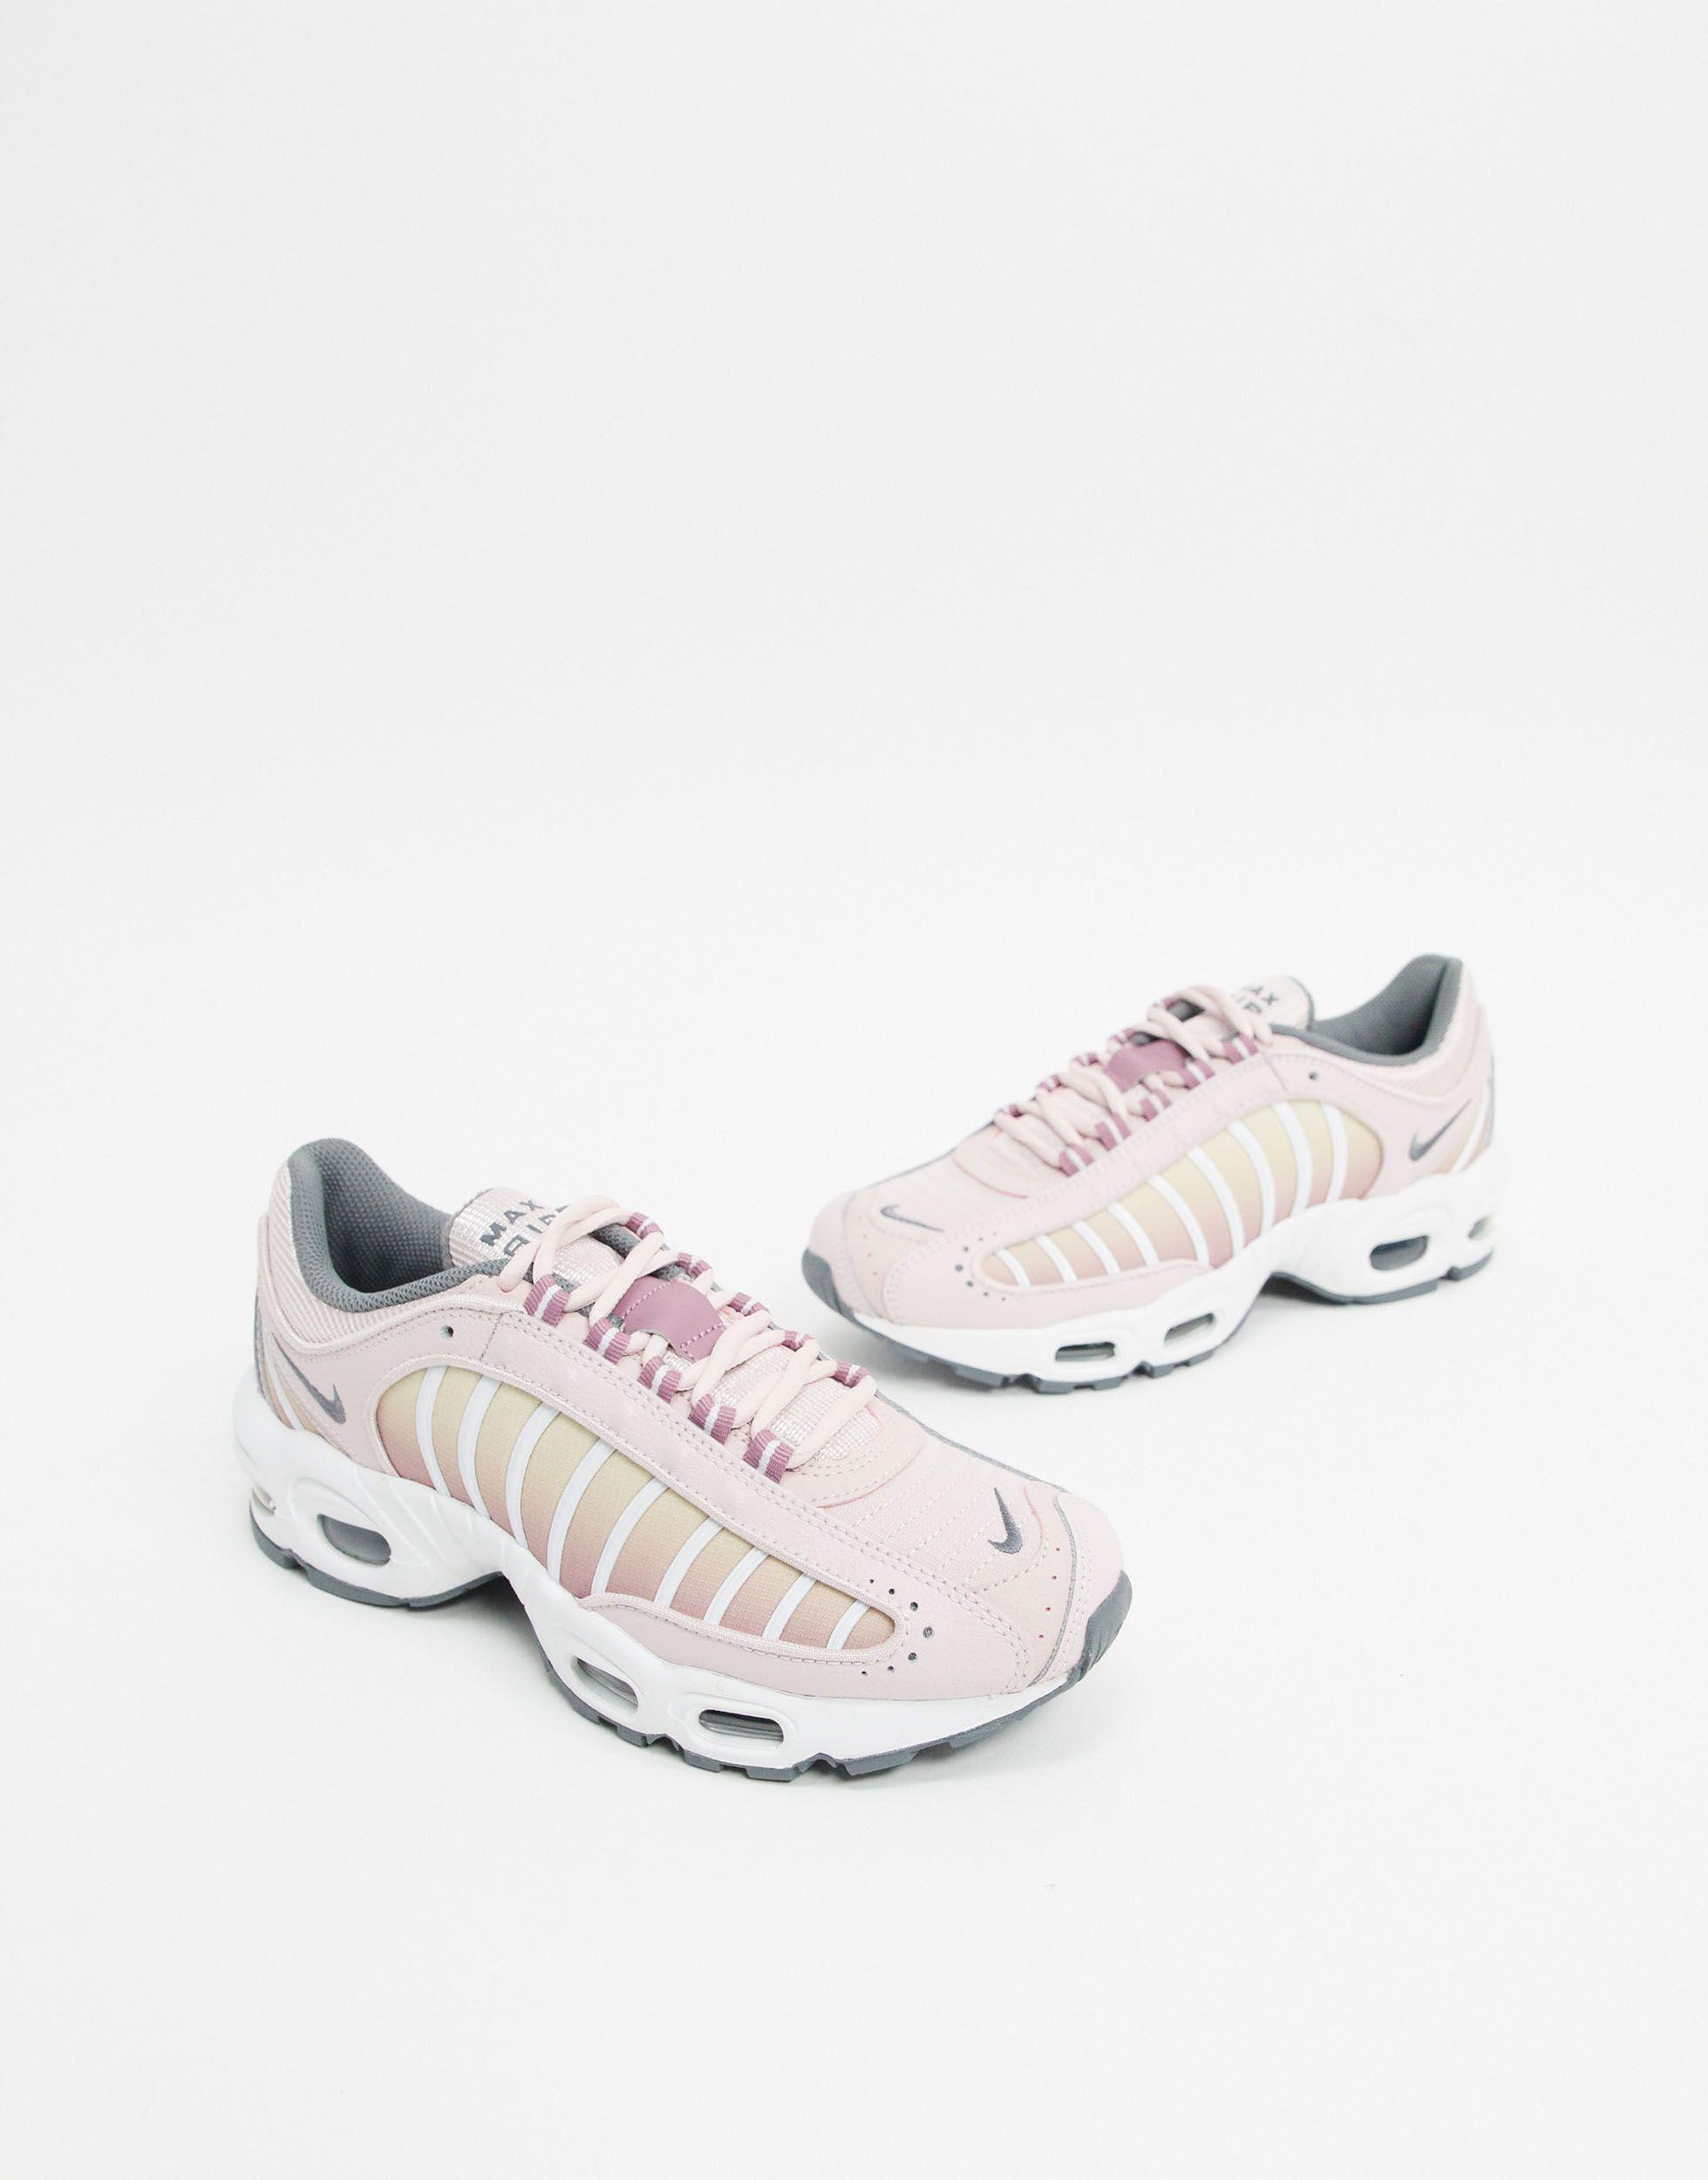 nike tailwind pale pink sneakers